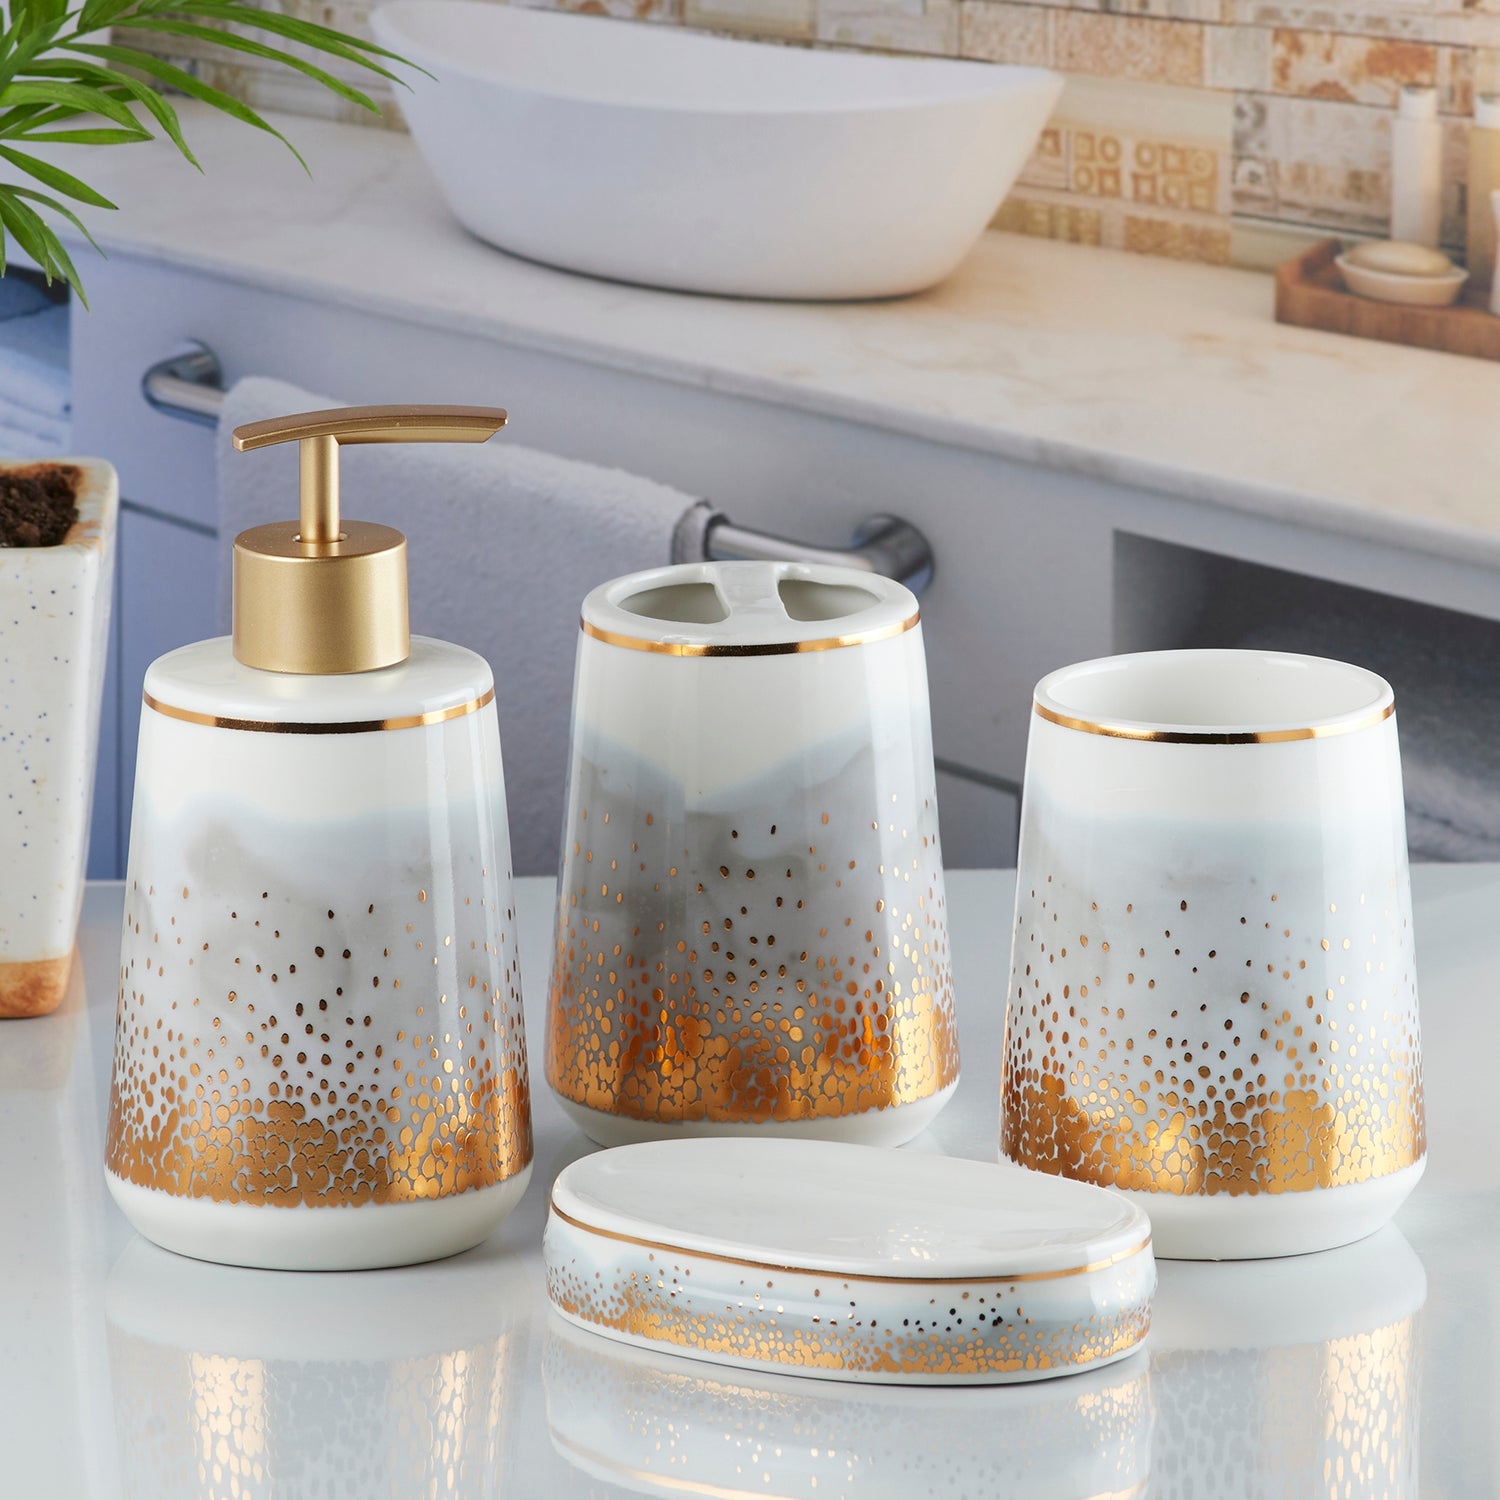 Ceramic Bathroom Accessories Set of 4 Bath Set with Soap Dispenser (9748)